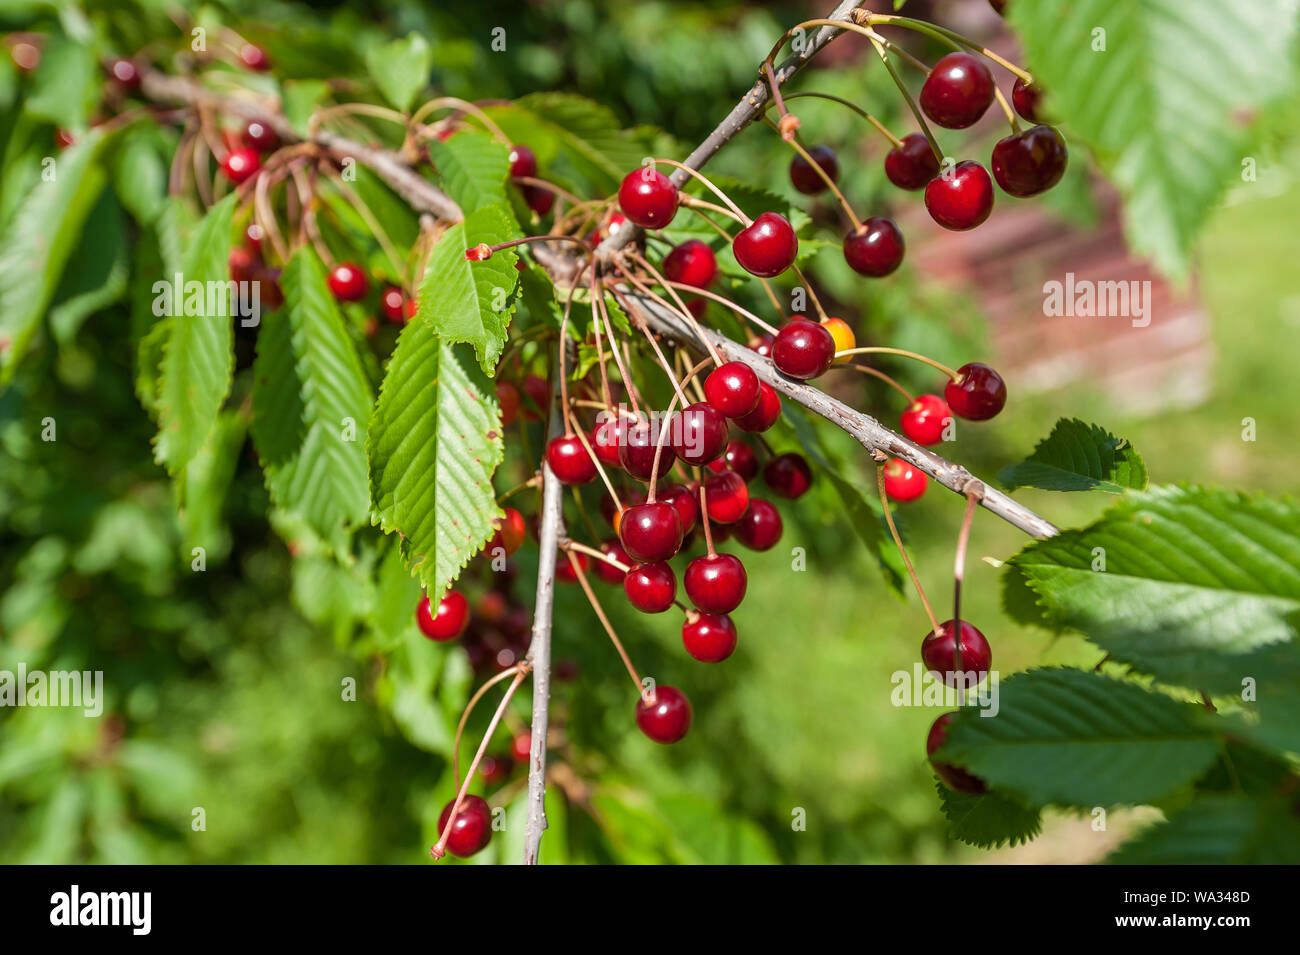 Rosso, mature le ciliegie selvatiche (Prunus avium) appesi a un ramo Foto  stock - Alamy